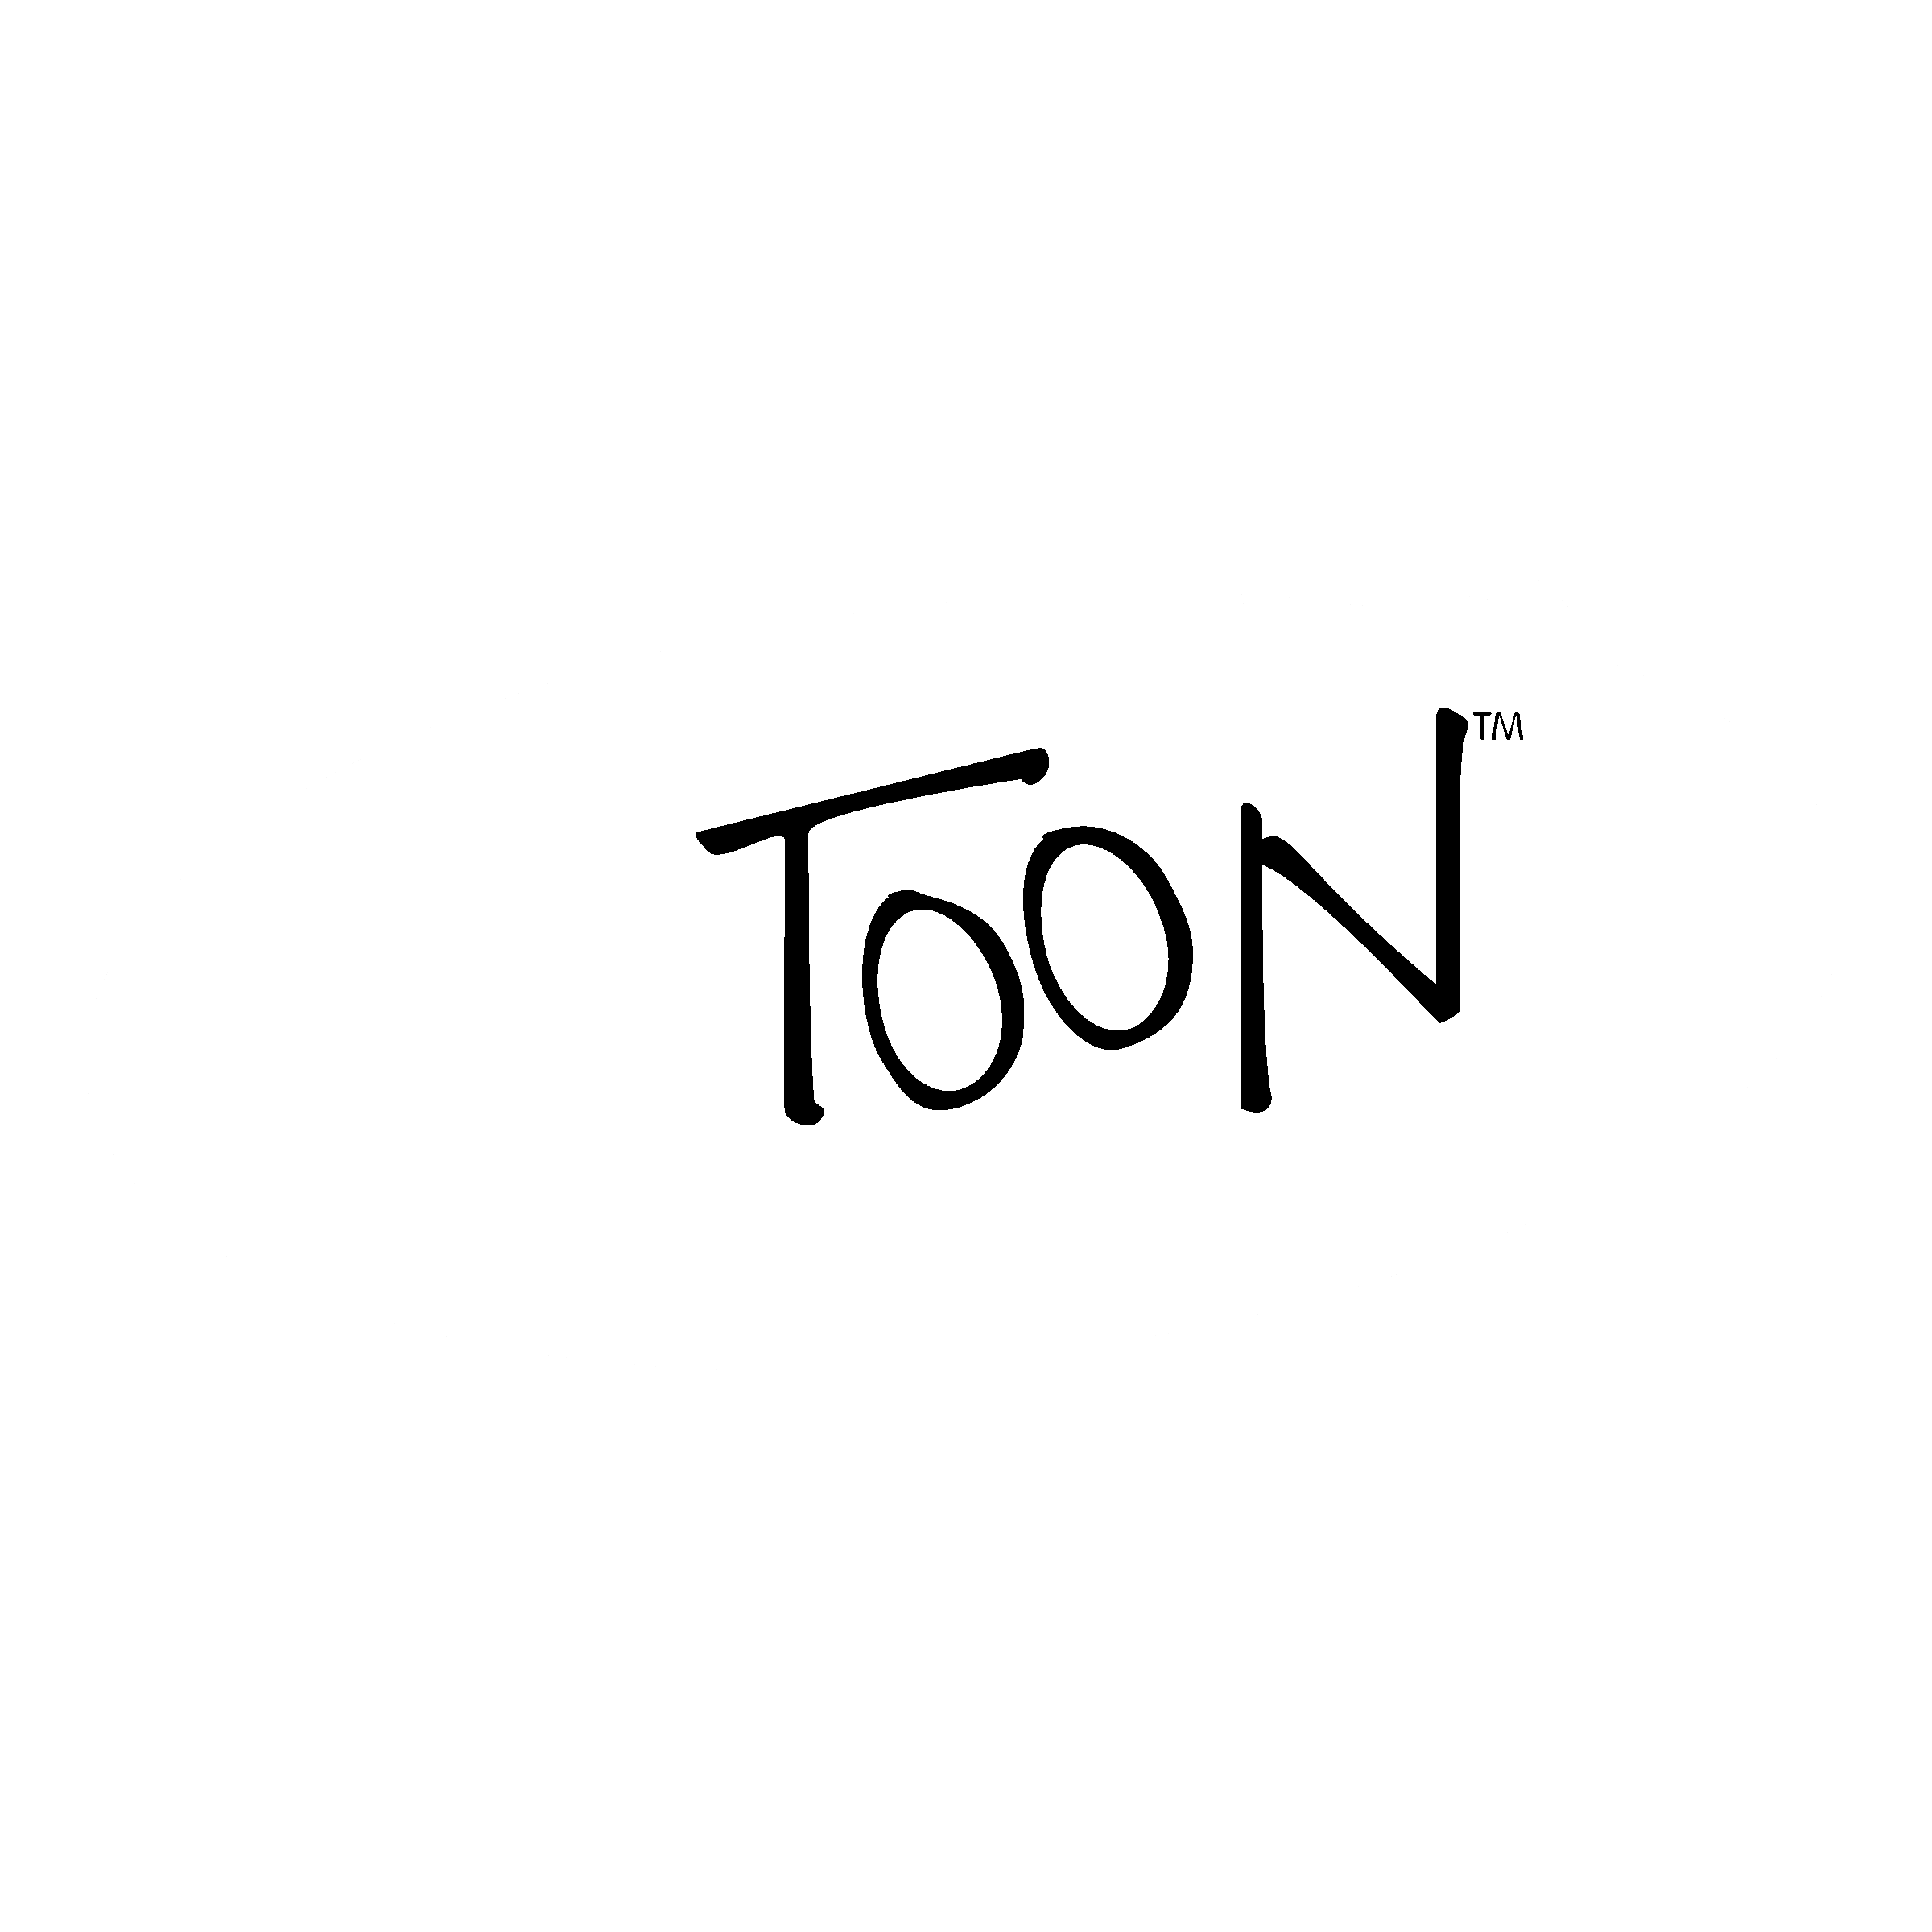 Teletoon Logo - Teletoon Logo PNG Transparent & SVG Vector - Freebie Supply